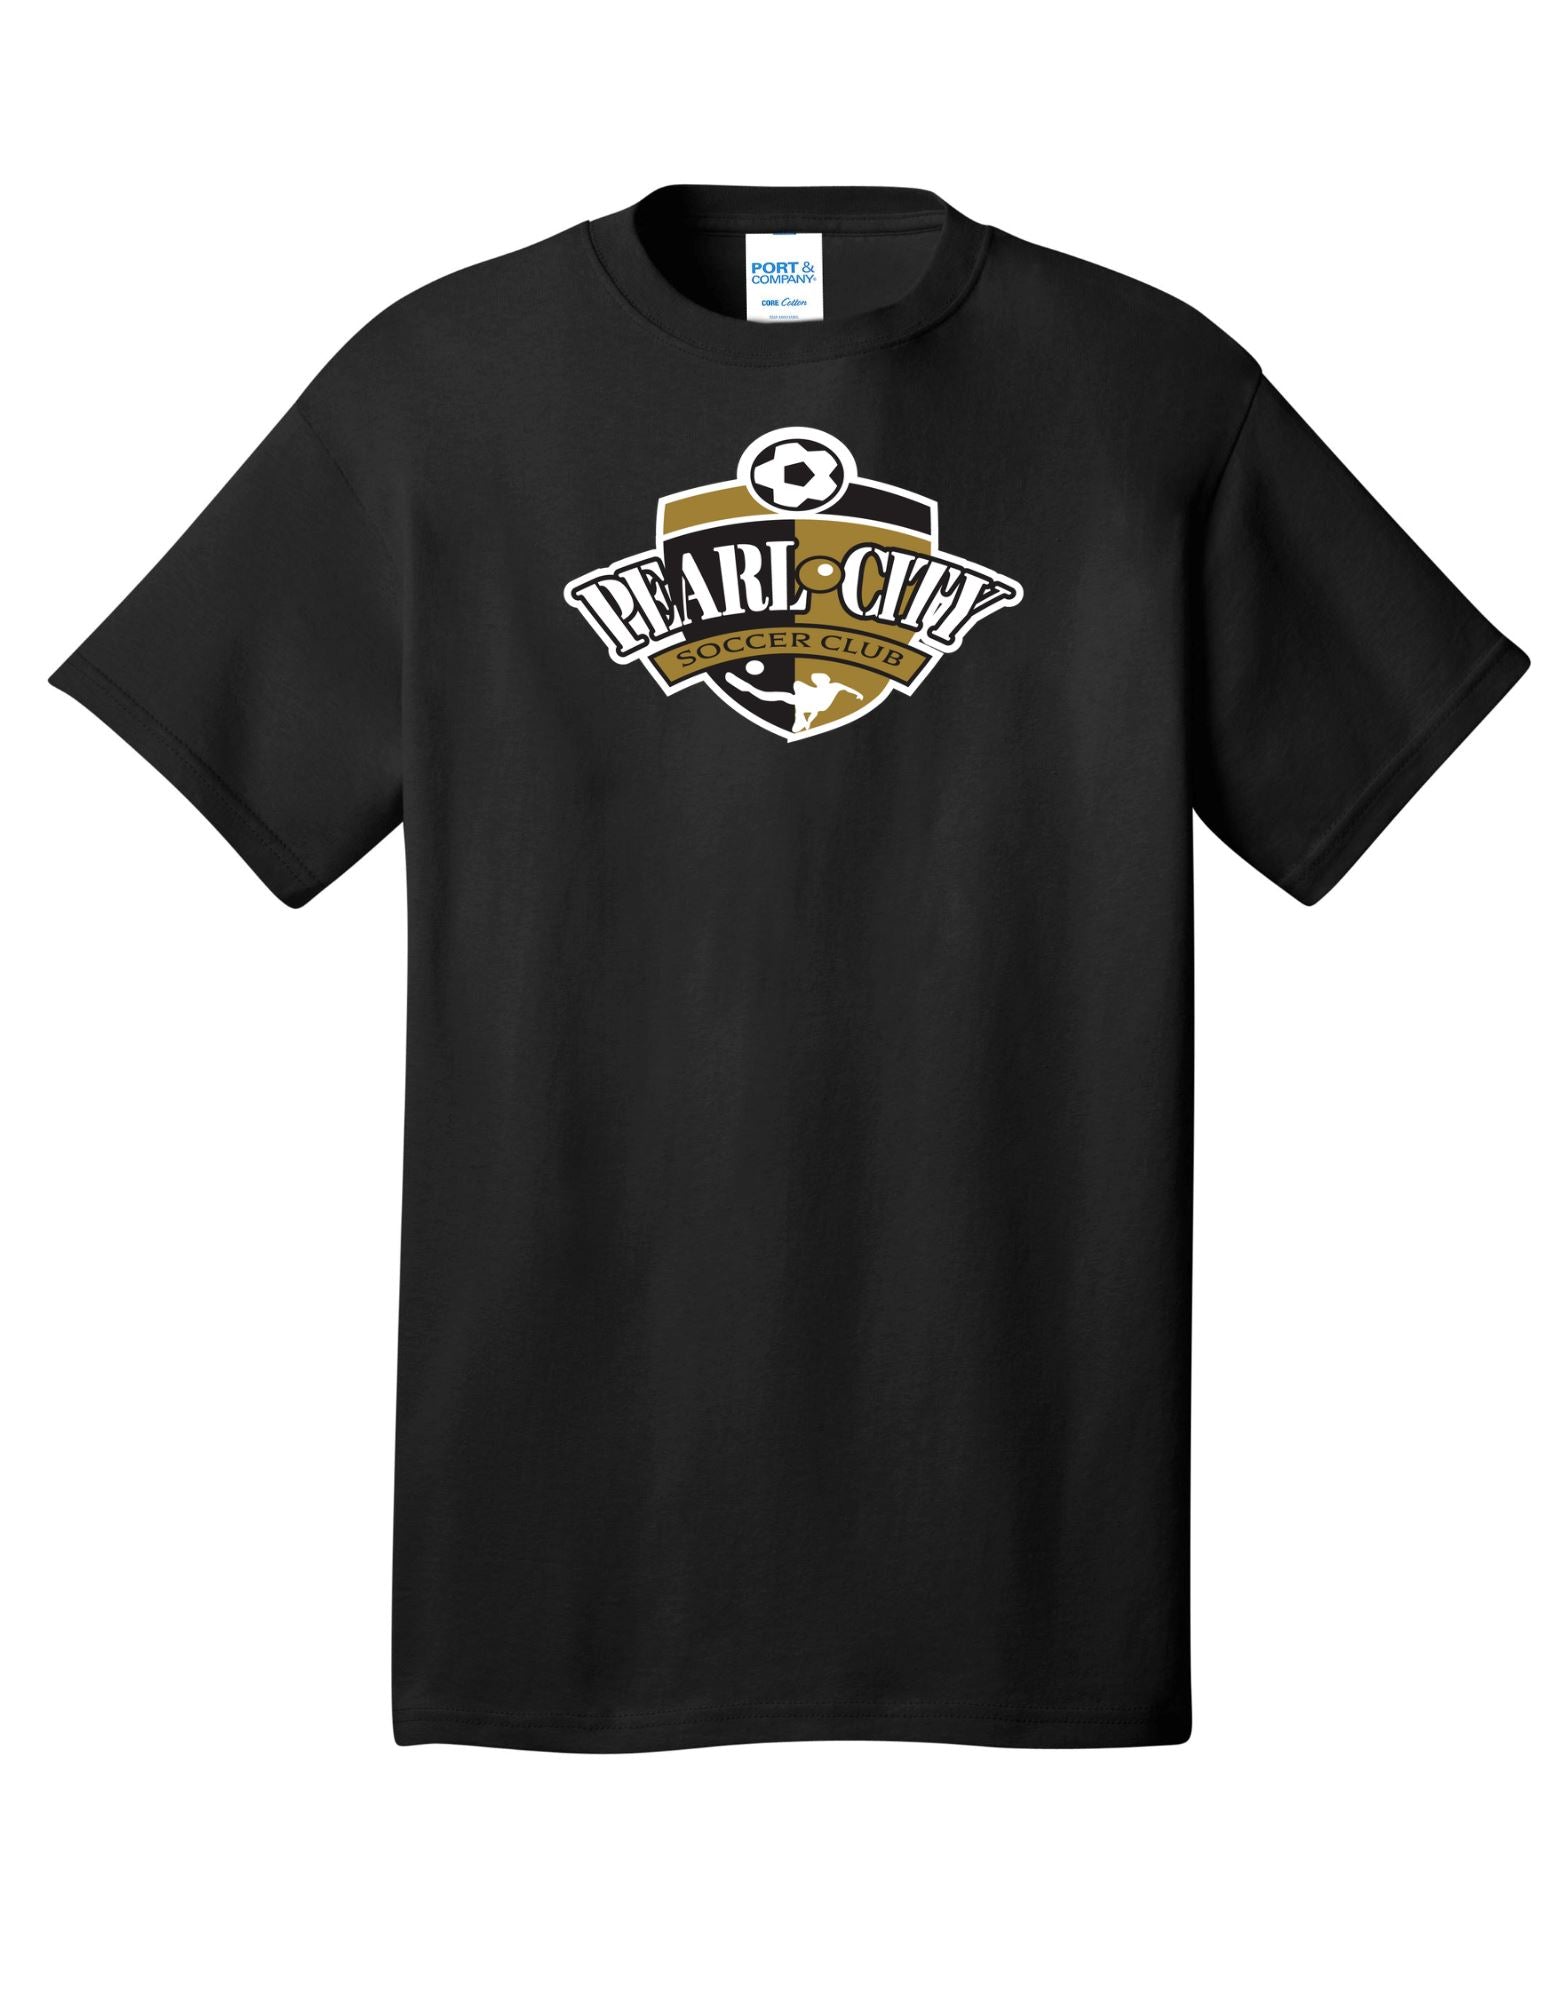 Pearl City Soccer Club Men's Core Cotton Tee T-Shirt Goal Kick Soccer Small Jet Black 